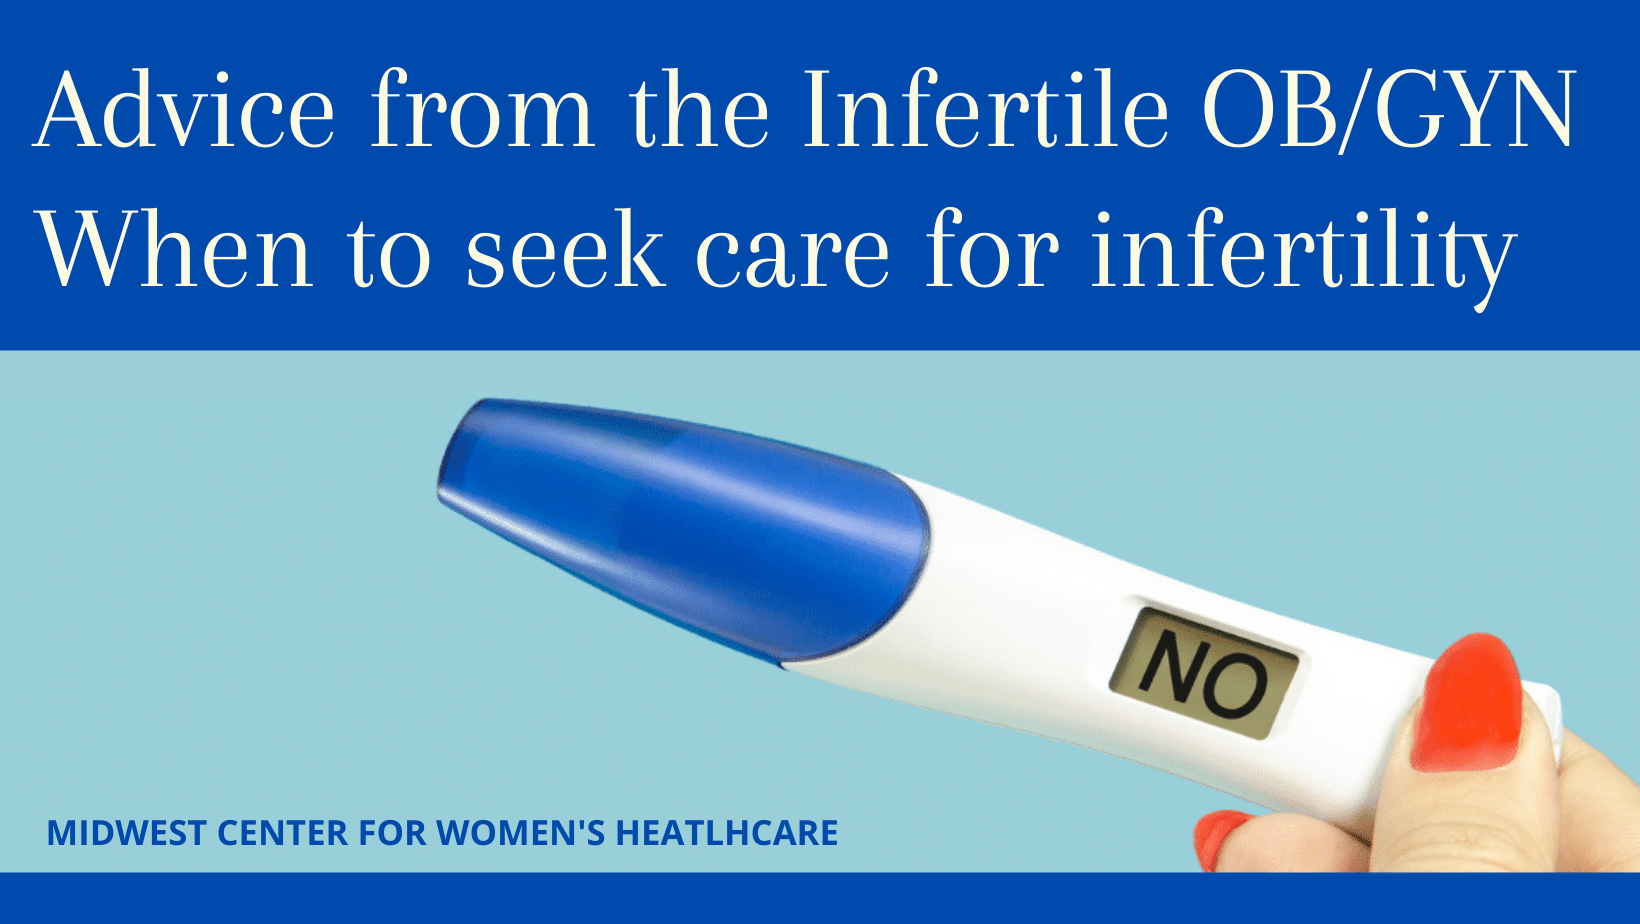 Dr. Barthel's blog on infertility